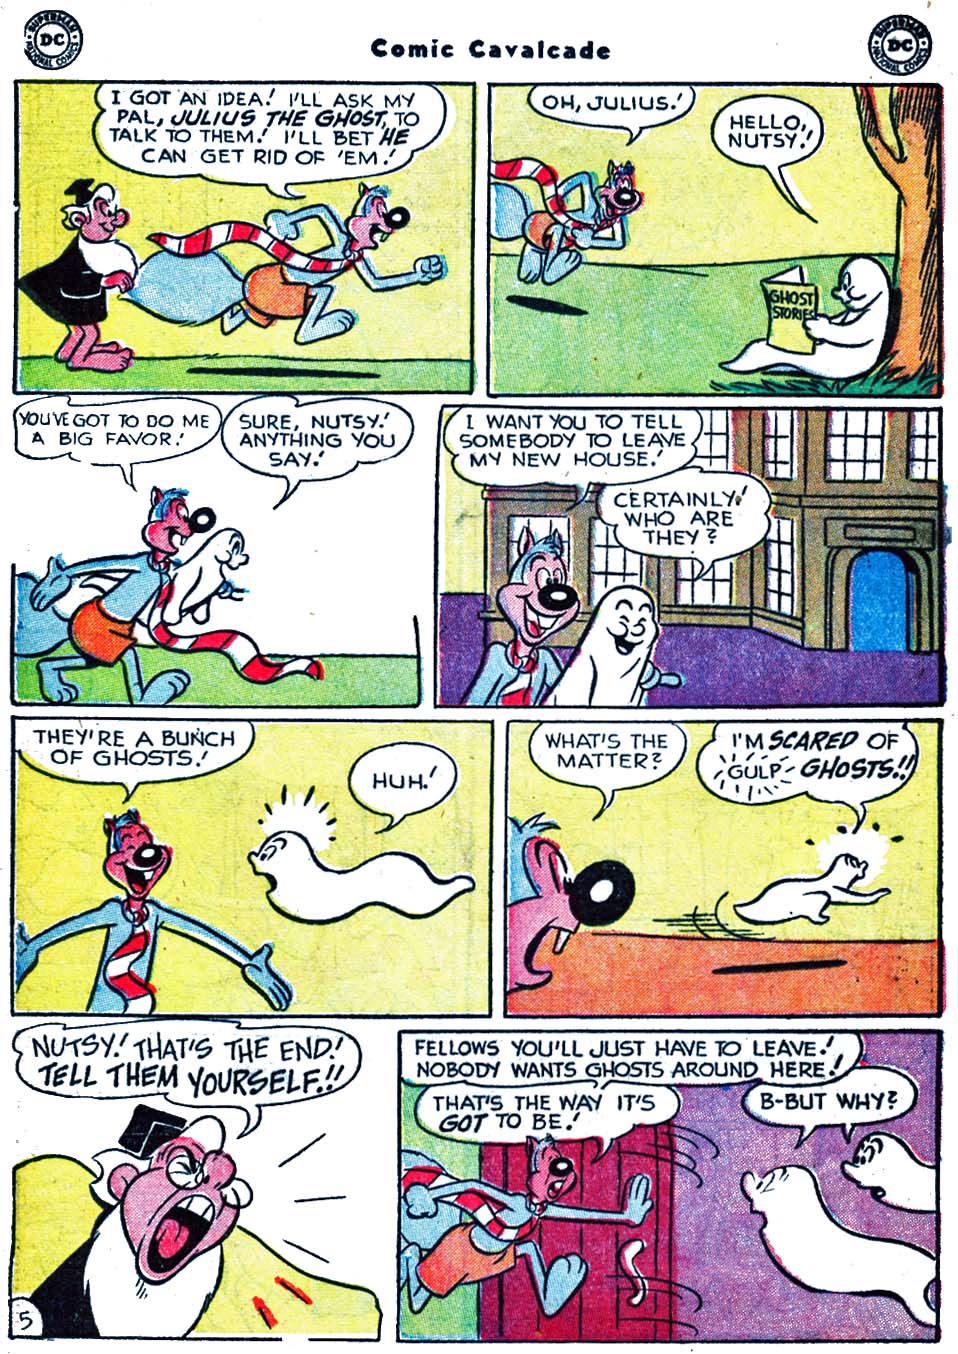 Comic Cavalcade issue 62 - Page 38